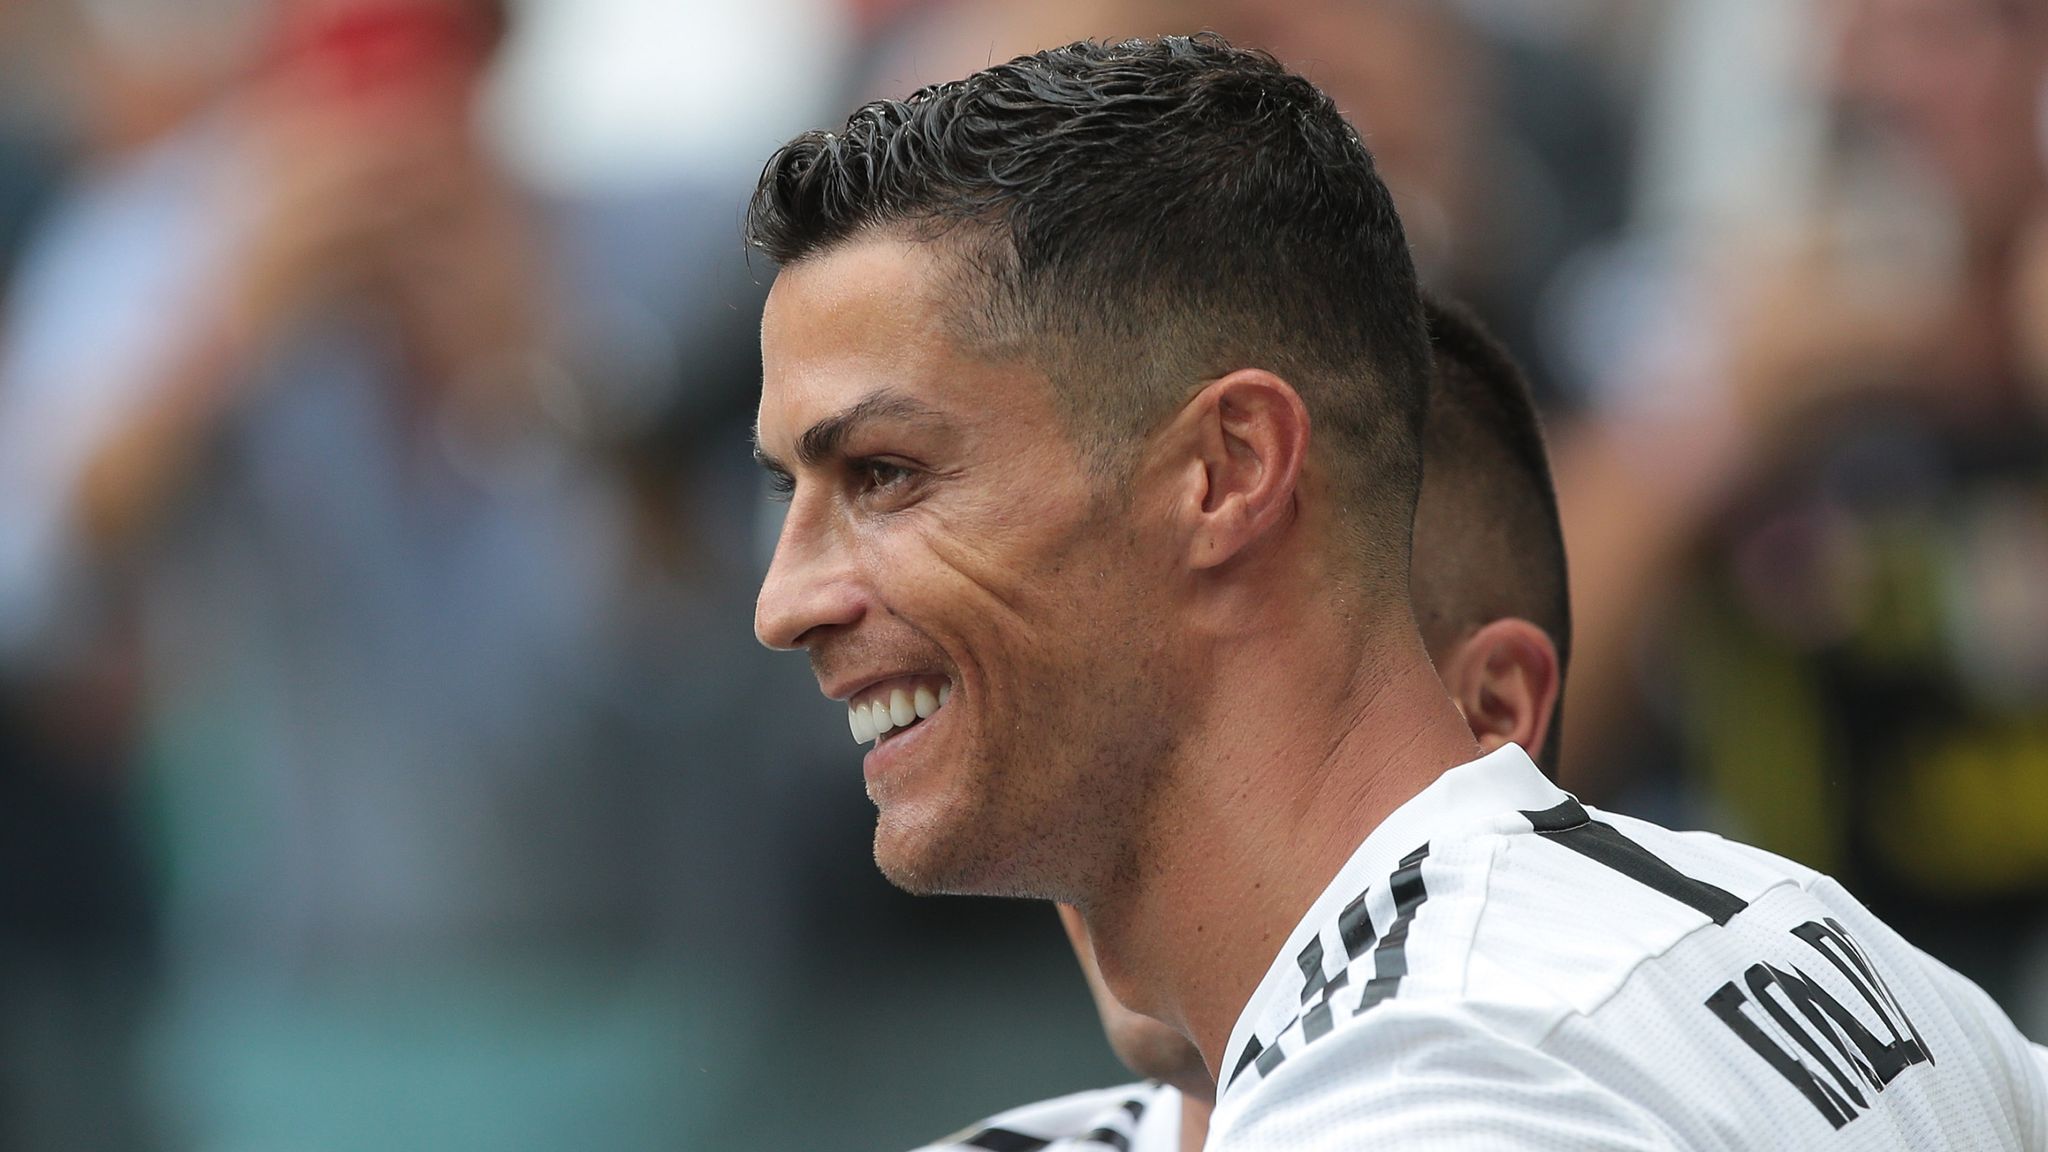 Ronaldo's New Haircut For 2020 : r/Juve